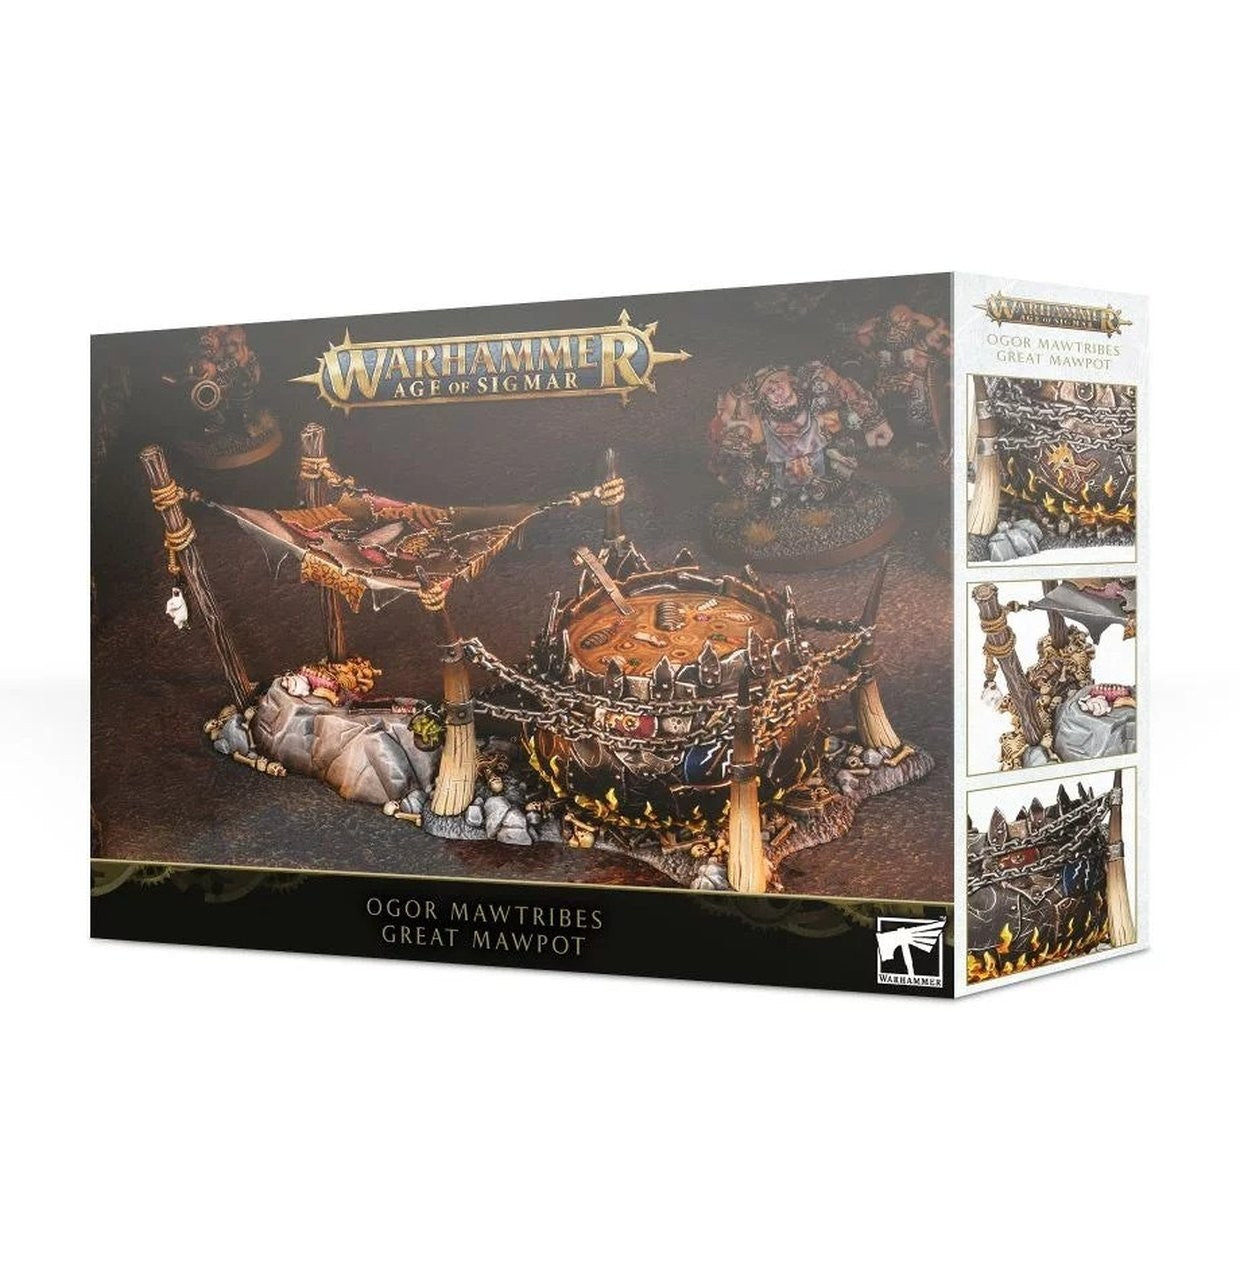  Games Workshop Warhammer 40K: Boarding Actions Terrain